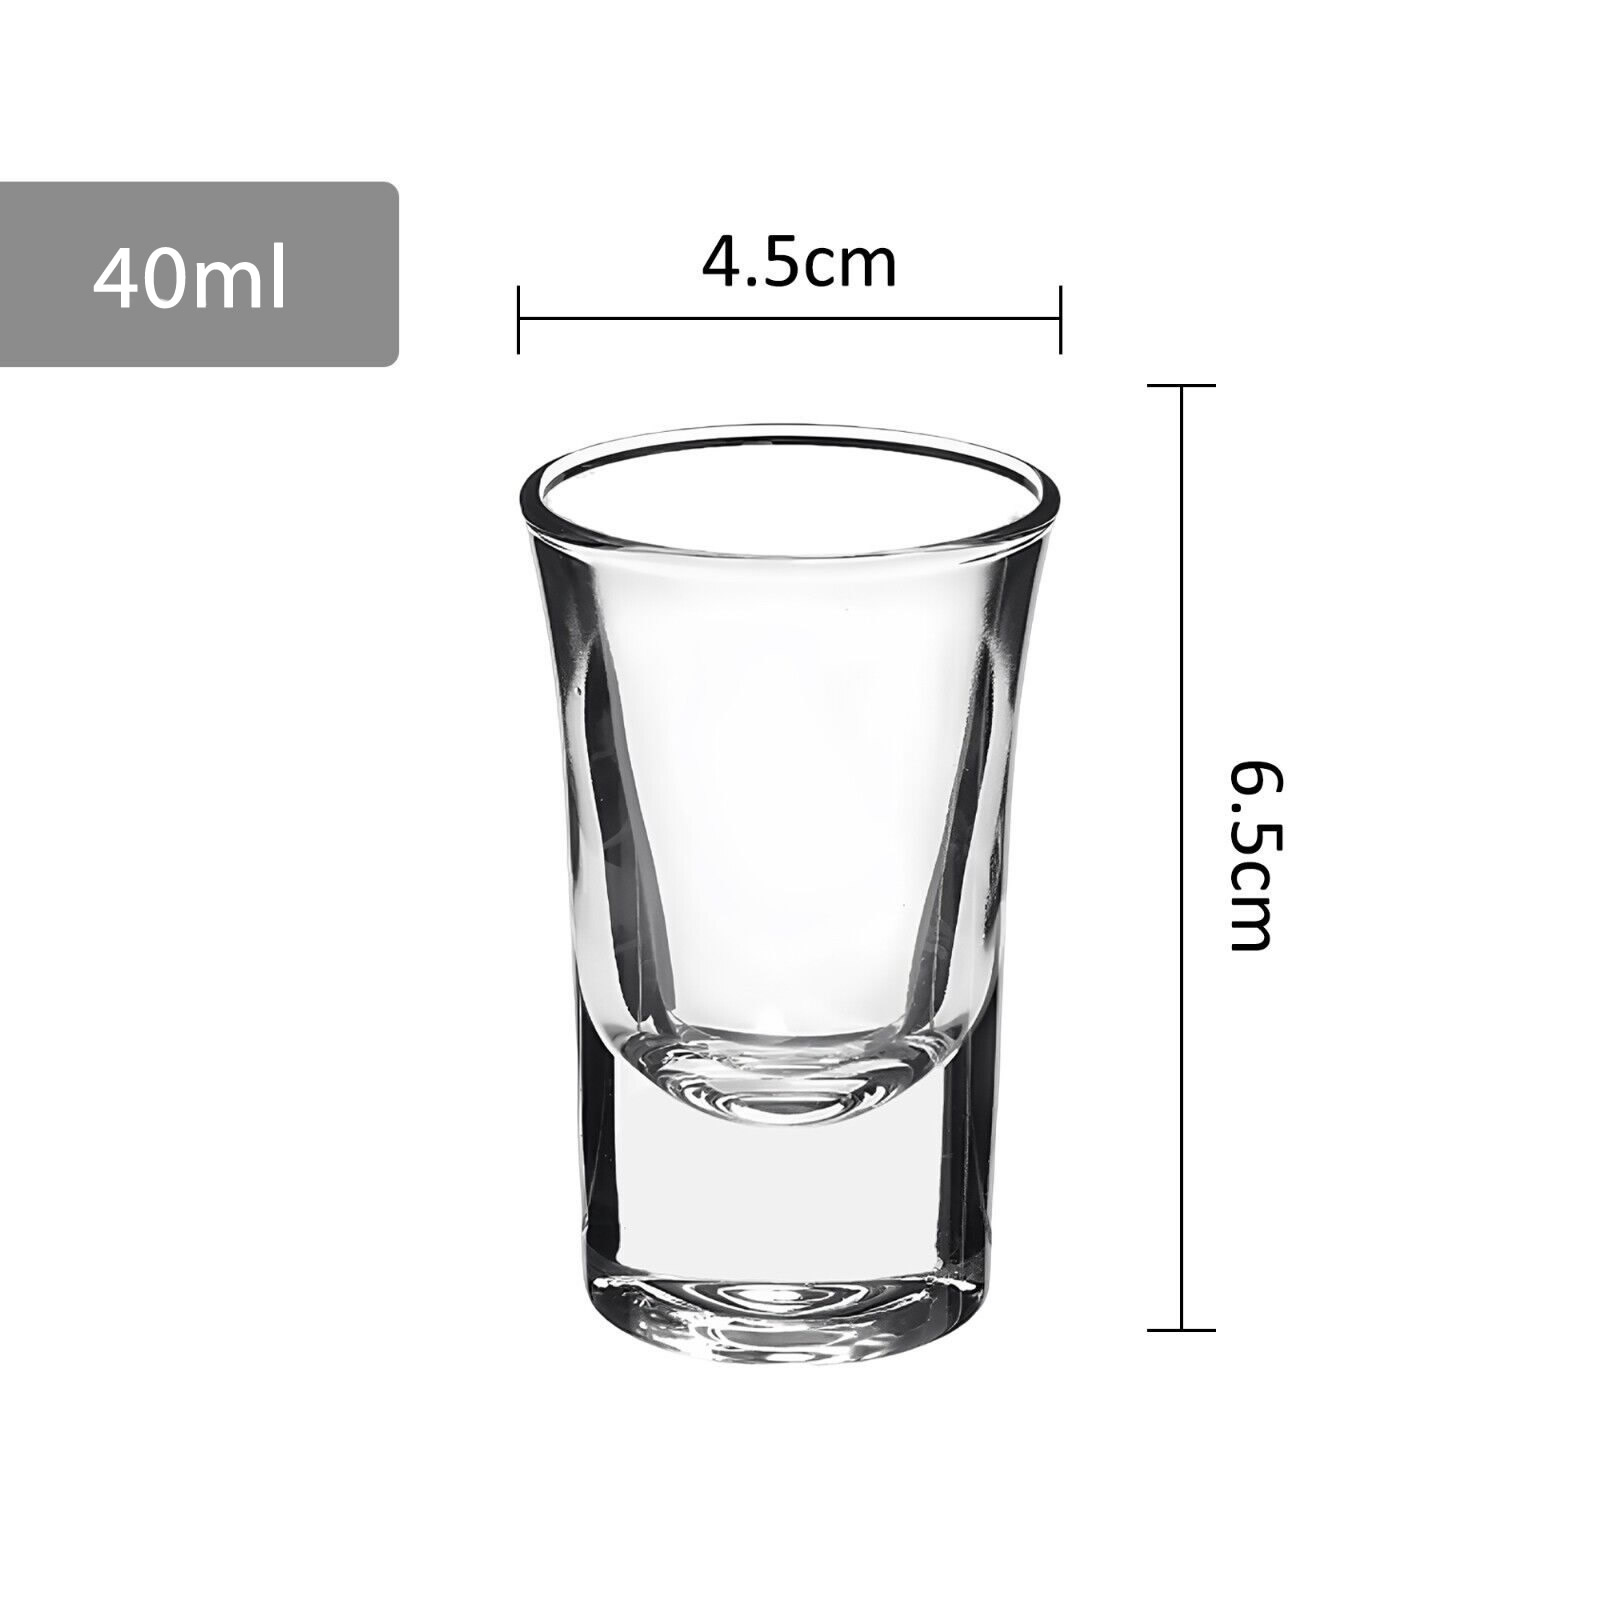 Japanese Sake Glass Dimensions